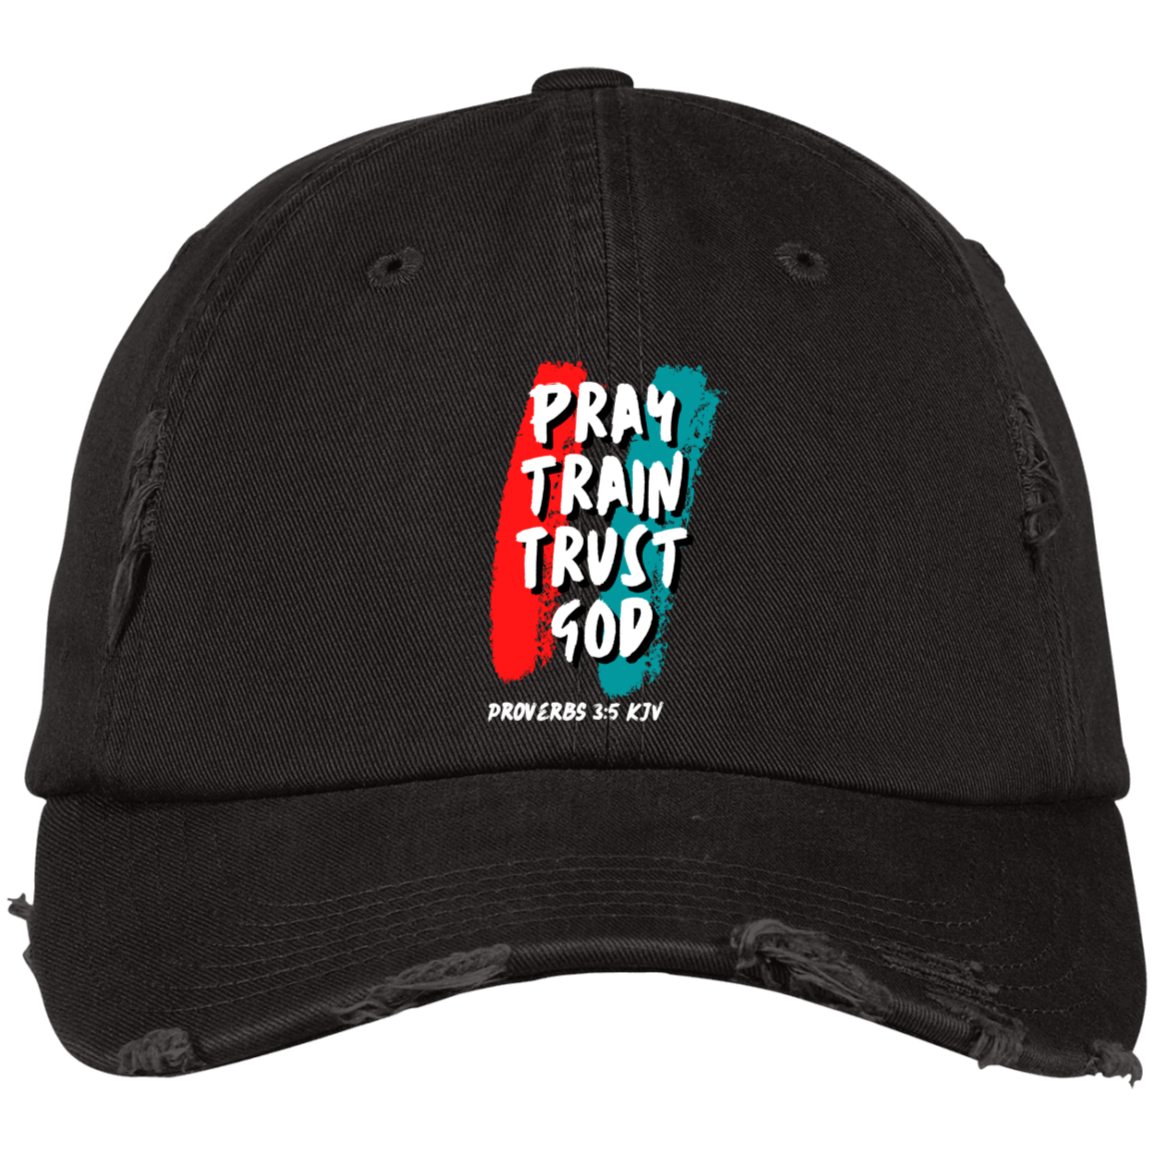 PRAY TRAIN TRUST GOD (DAD CAP)